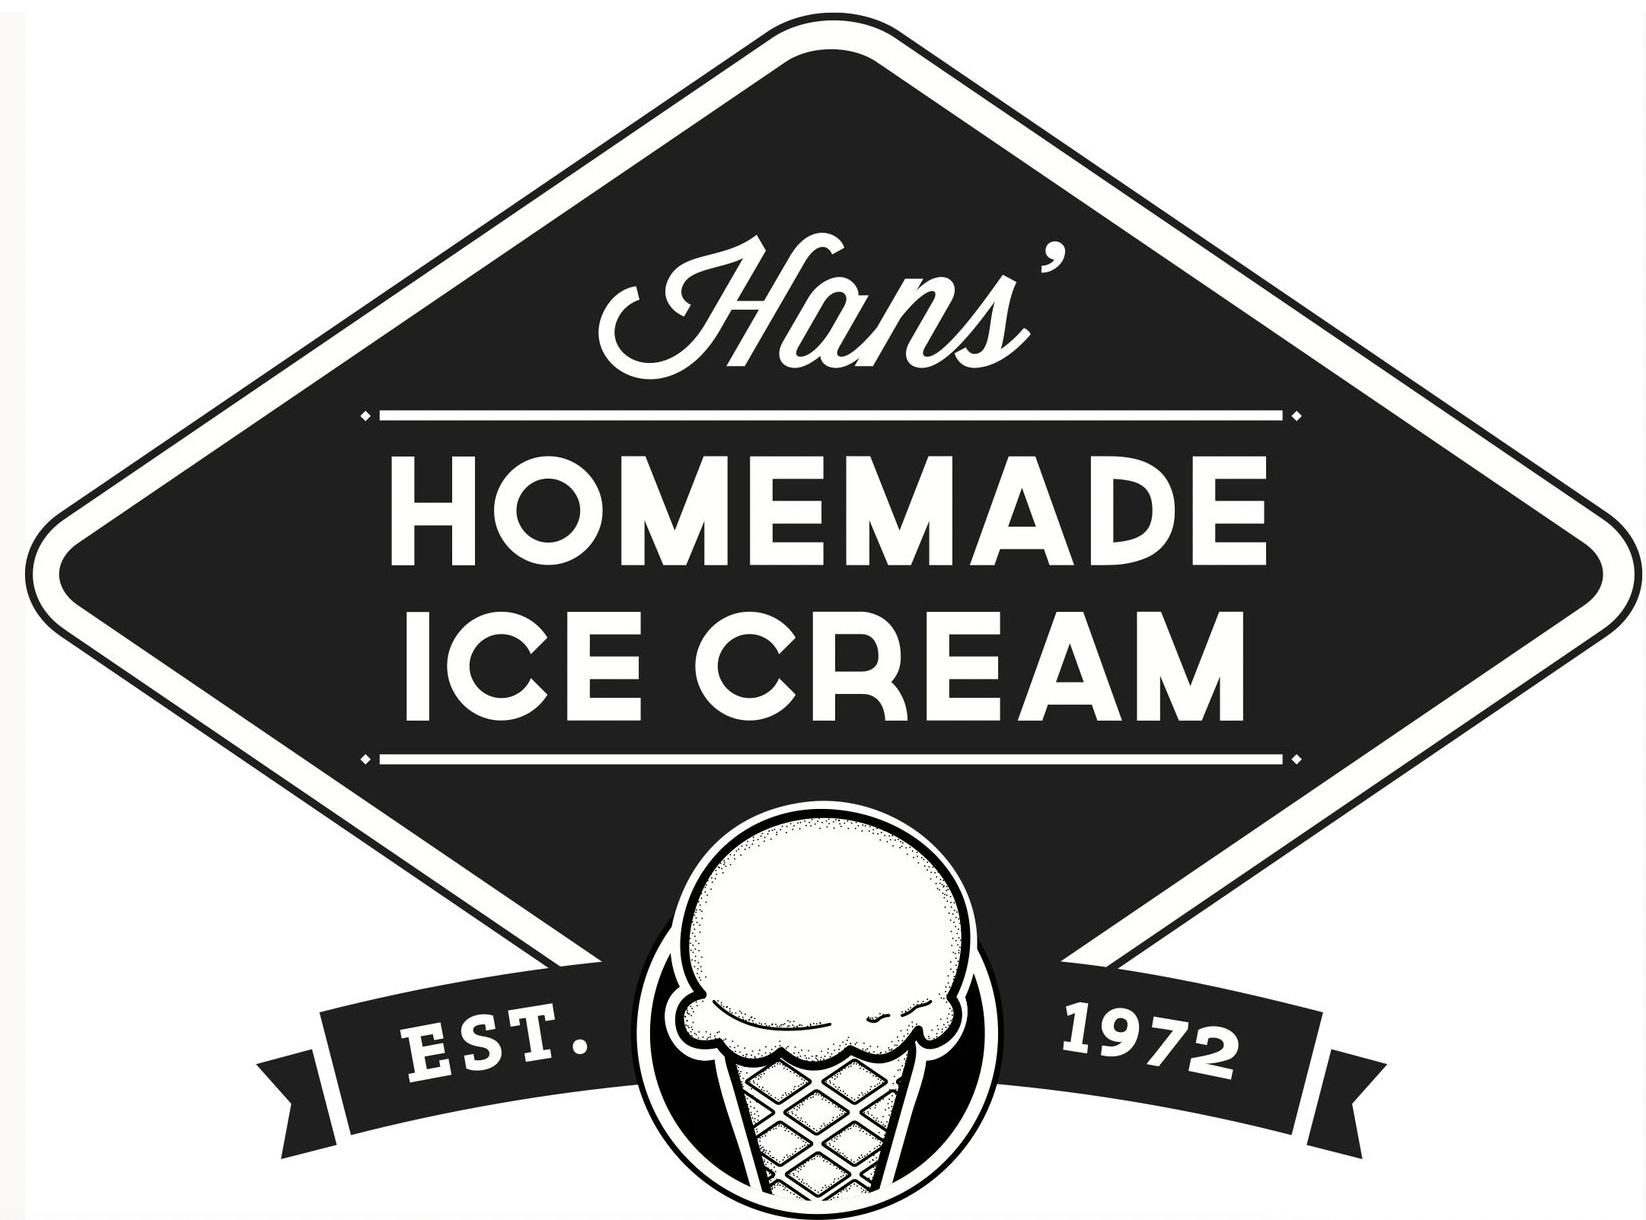 Hans Homemade Ice Cream photo pic